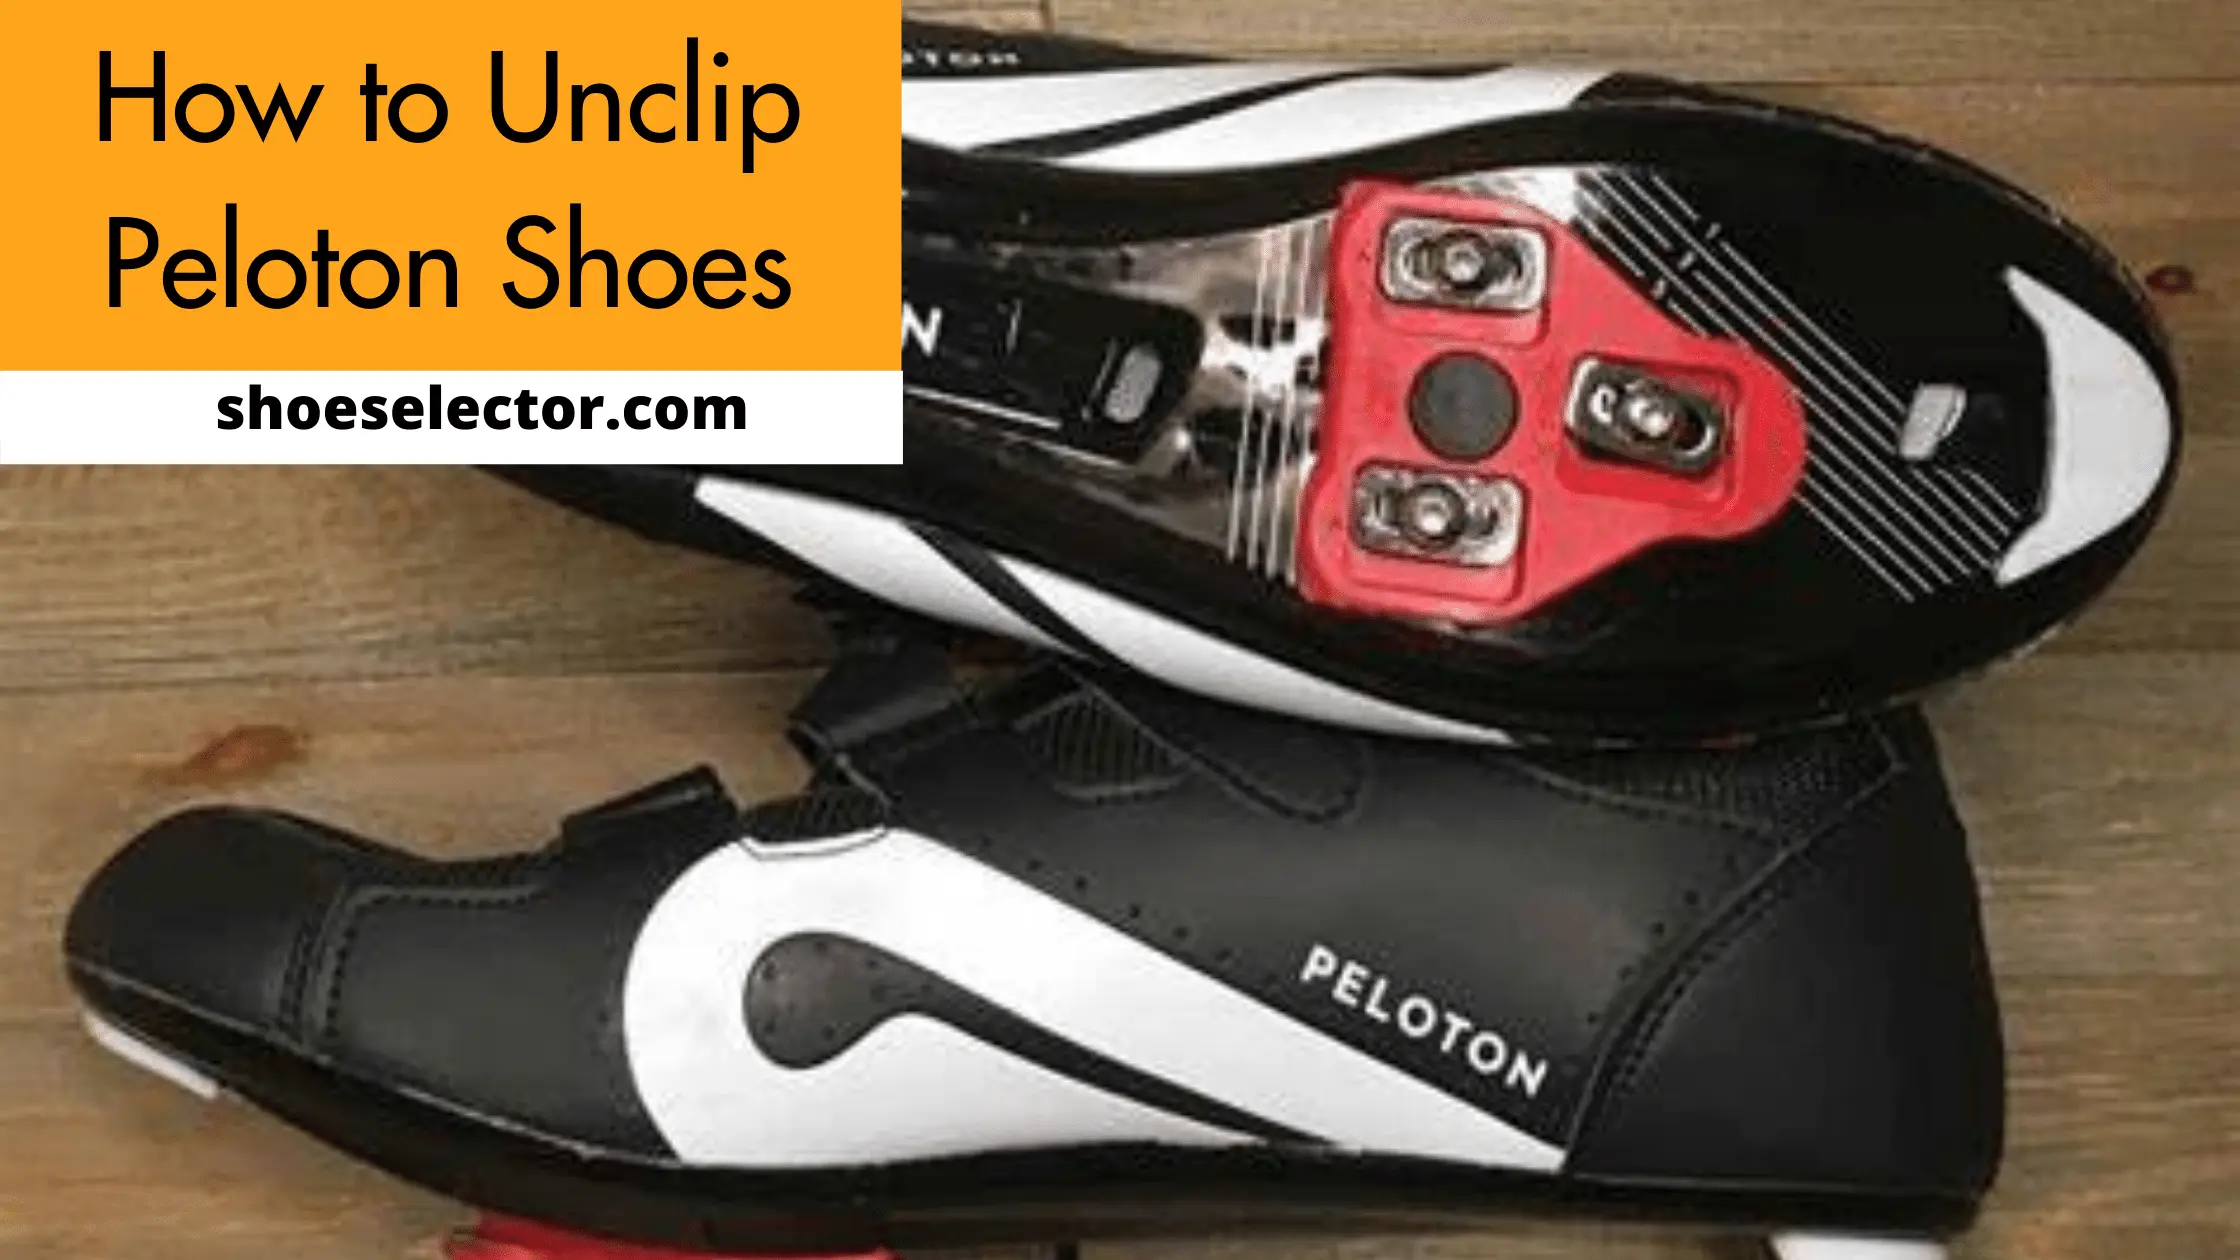 How to Unclip Peloton Shoes? - #1 Solution